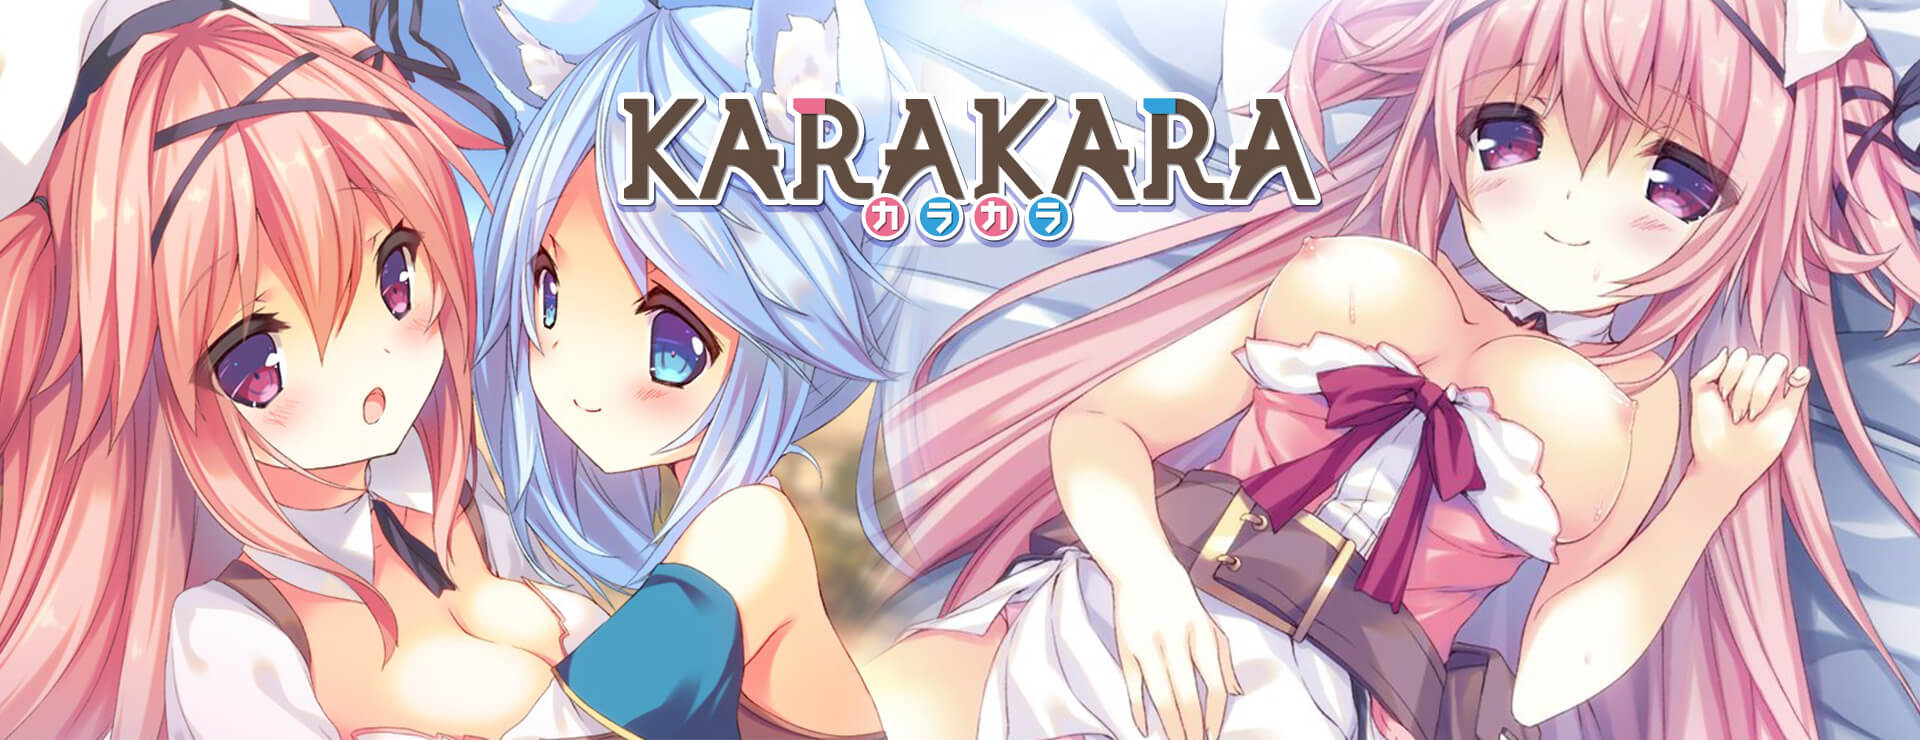 KARAKARA - Powieść wizualna Gra